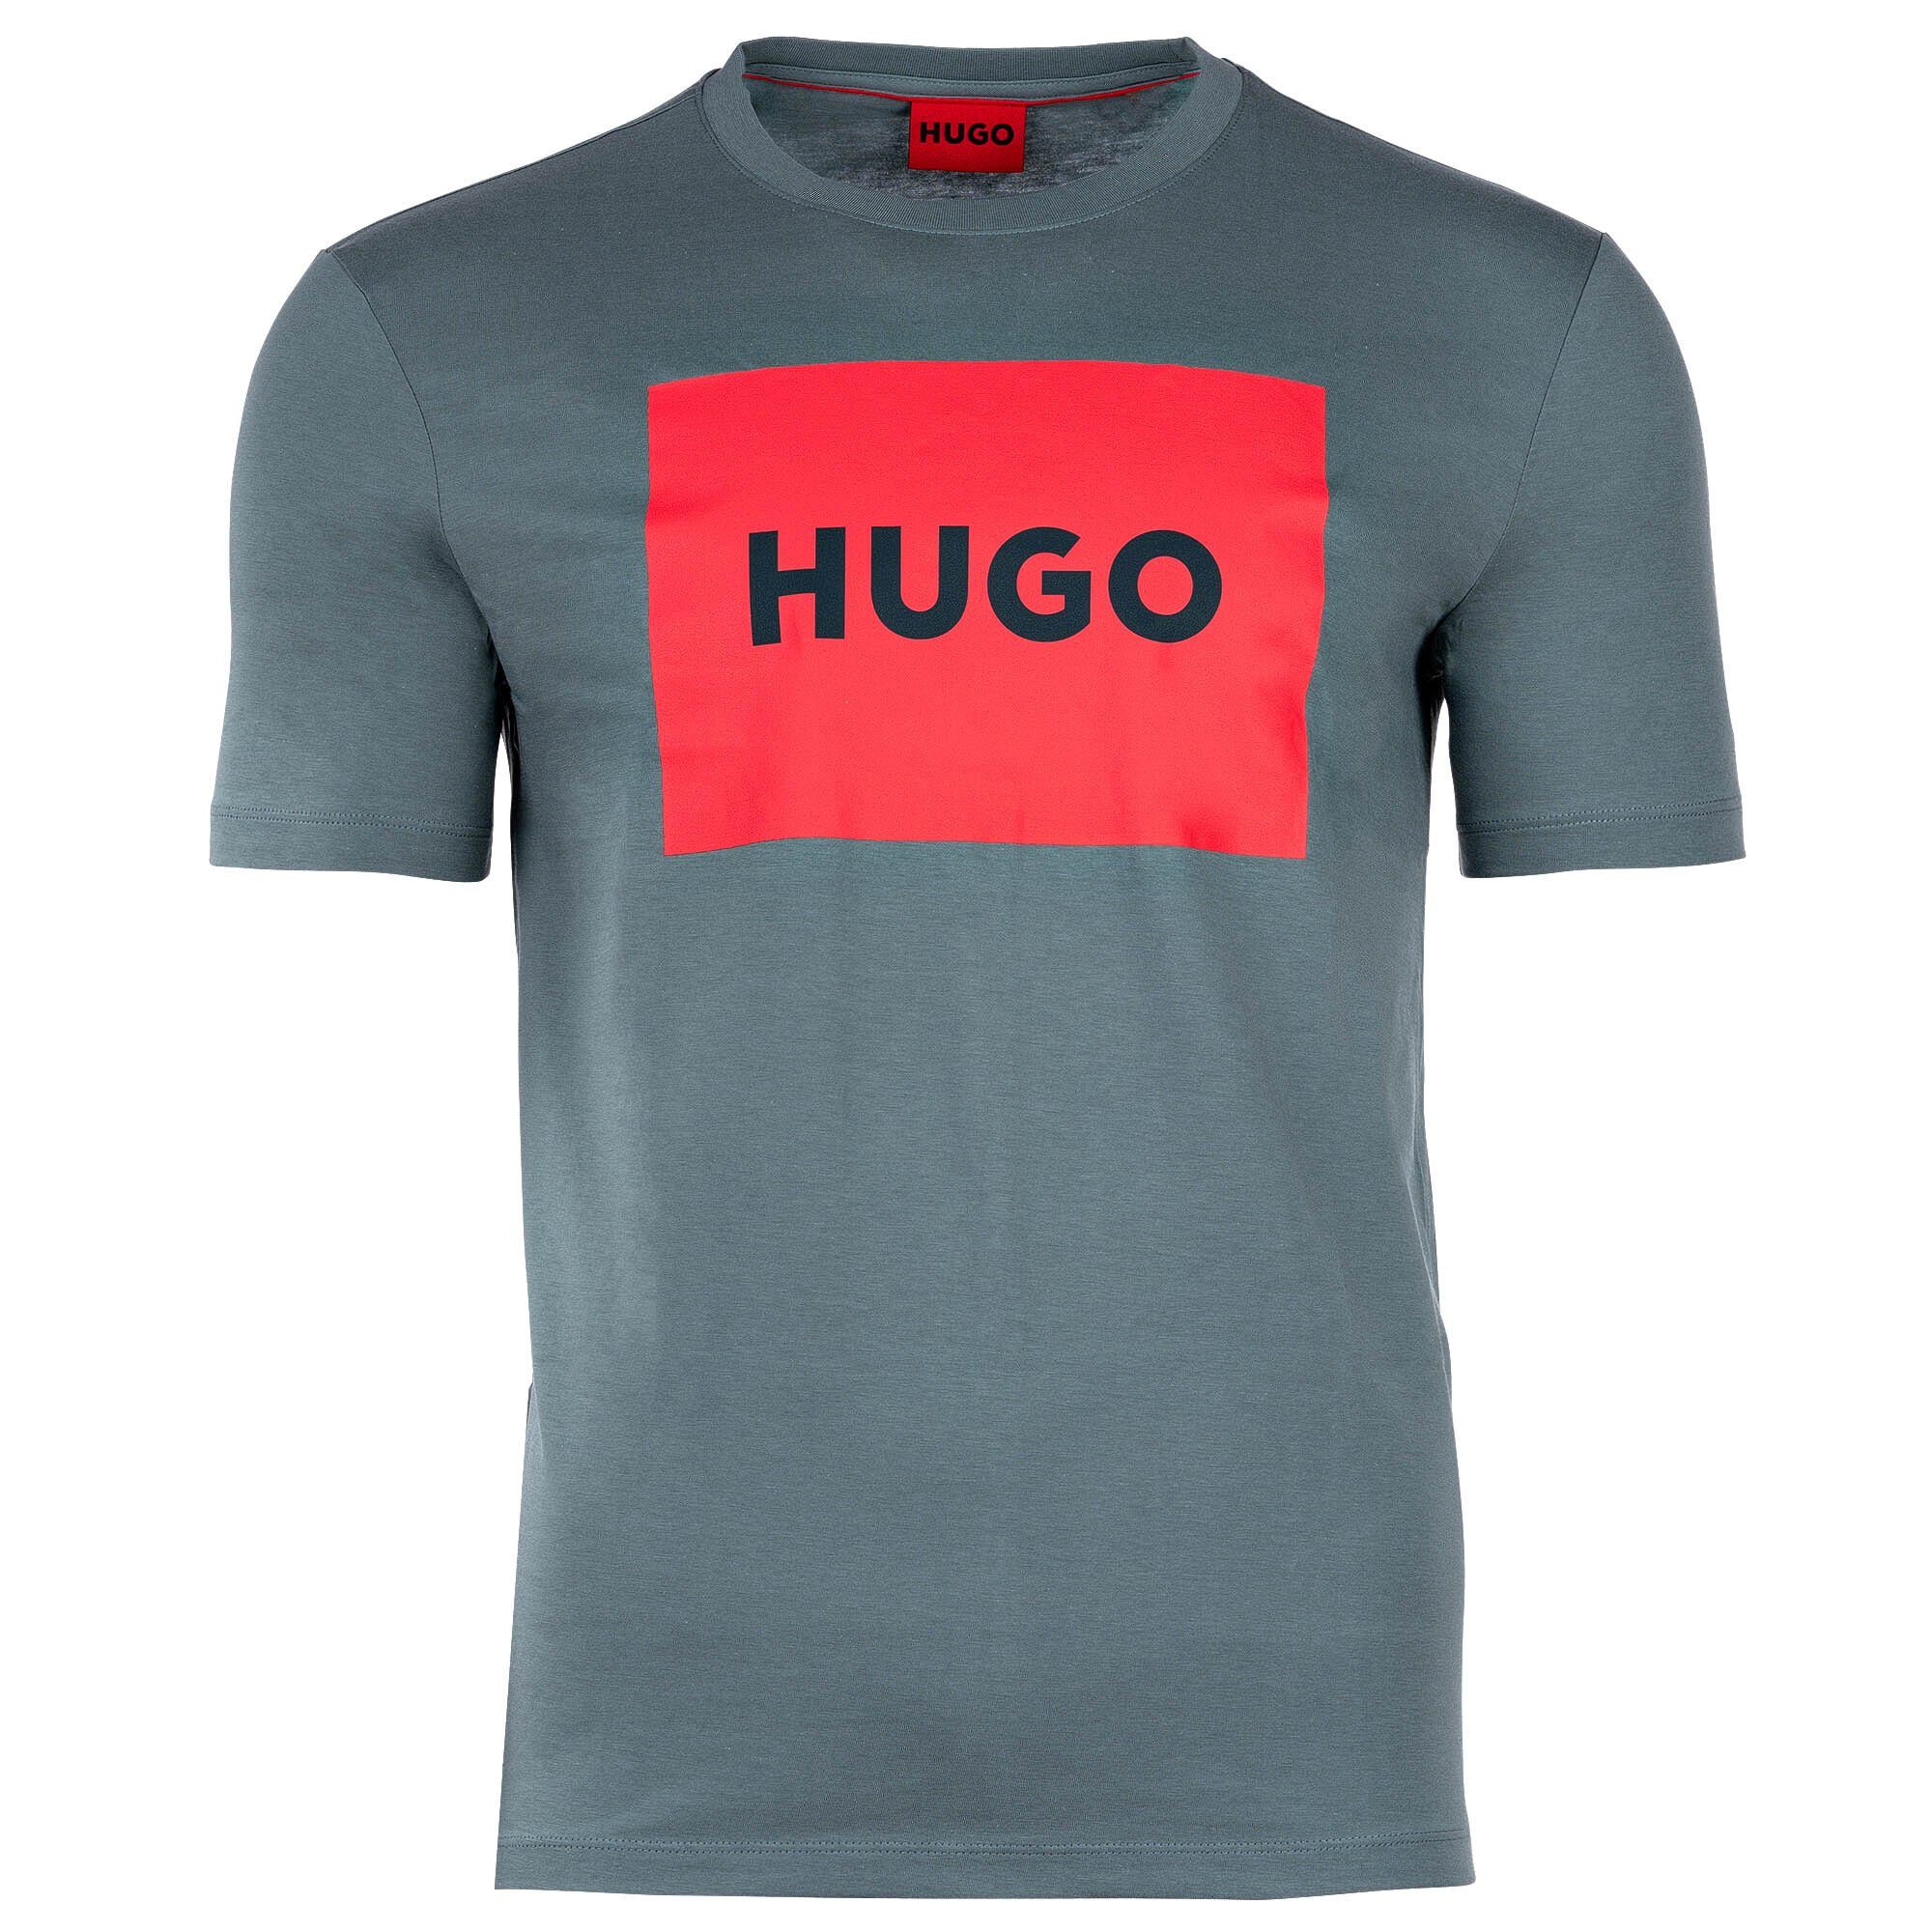 HUGO T-Shirt Herren T-Shirt - Dulive222, Rundhals, Kurzarm